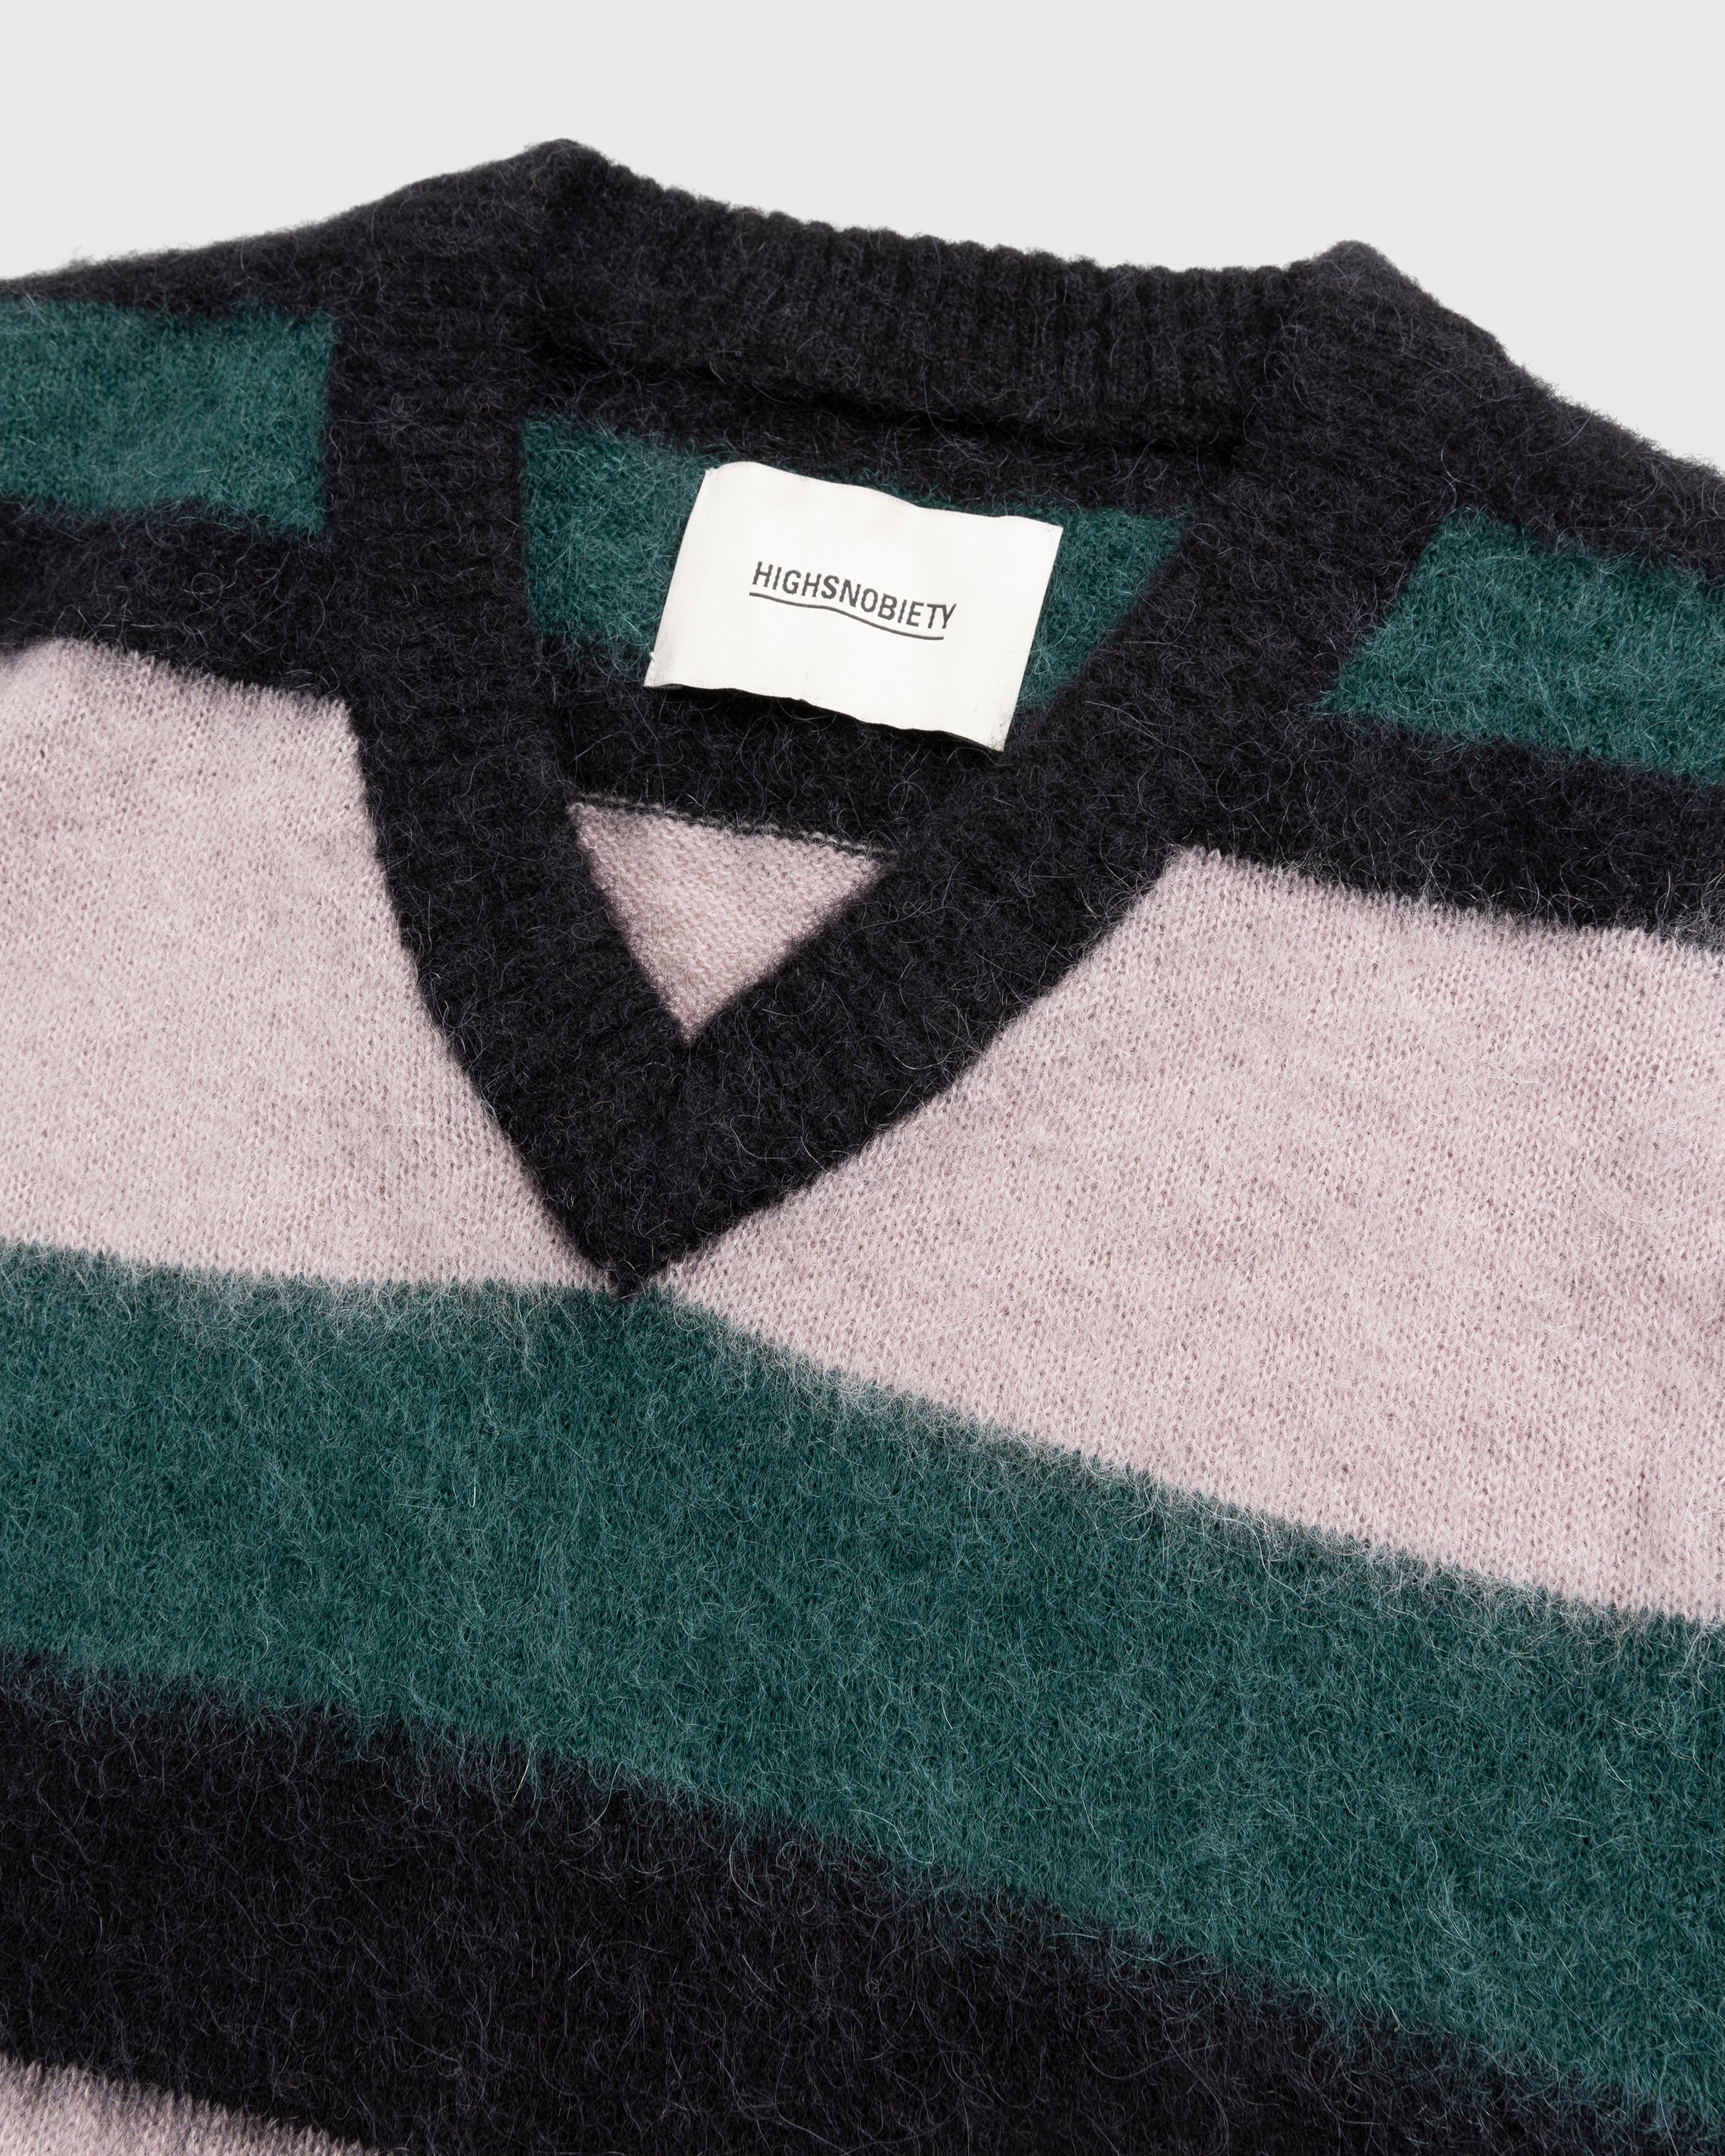 Highsnobiety - Alpaca Gradient Sweater Vest Pink/Green - Clothing - Multi - Image 5